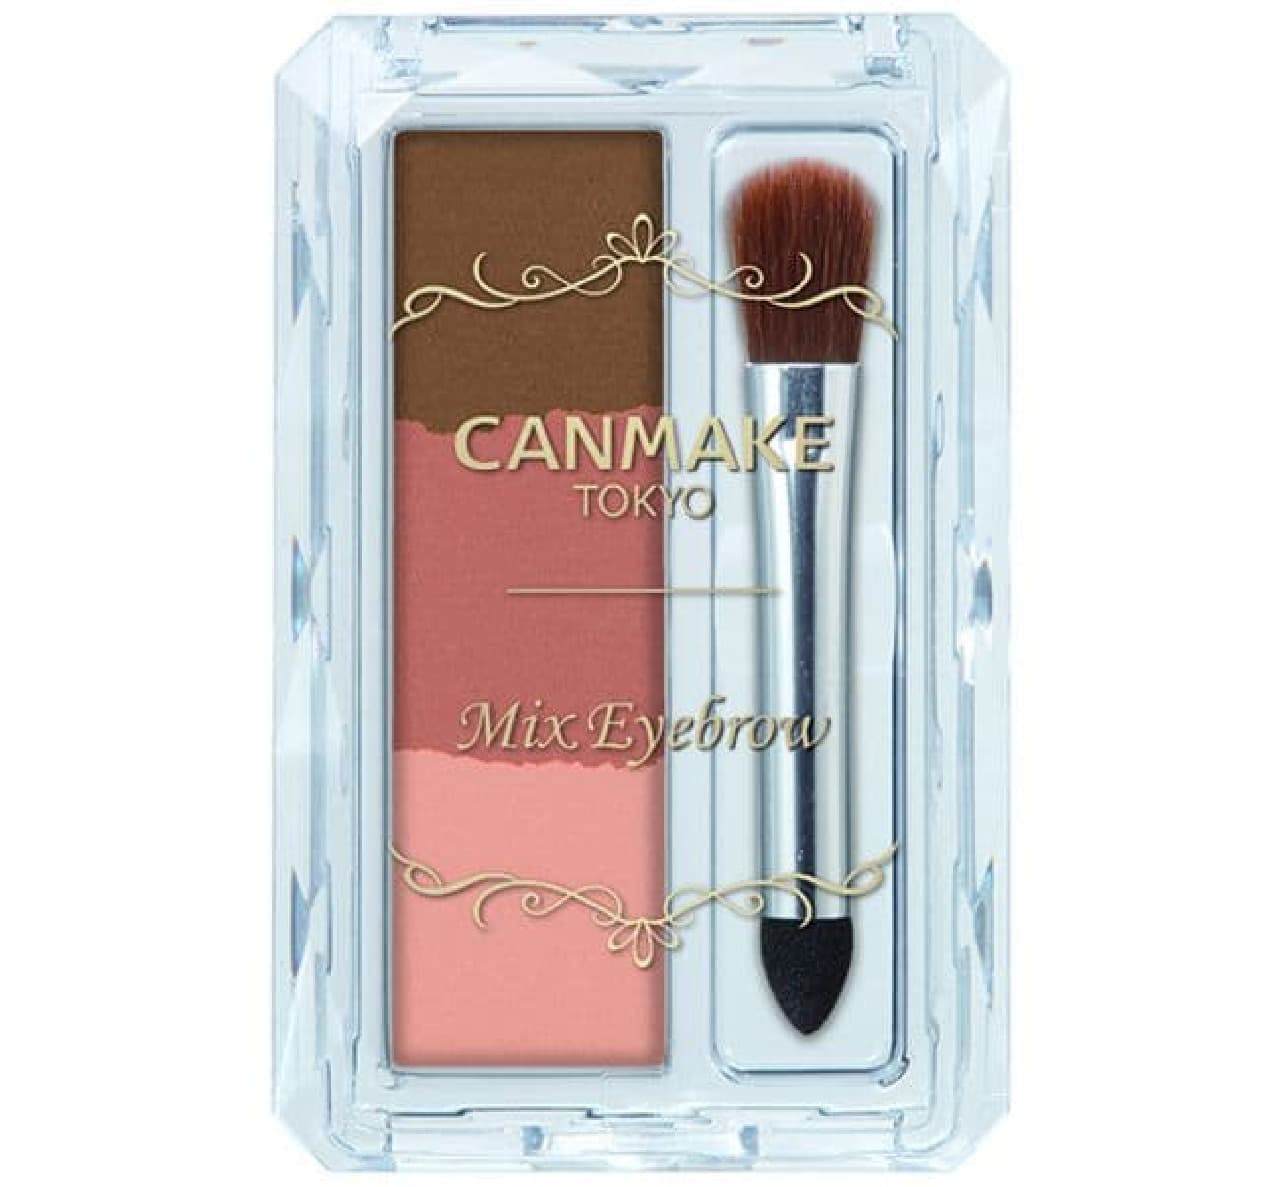 Cammake "Mixed Eyebrow